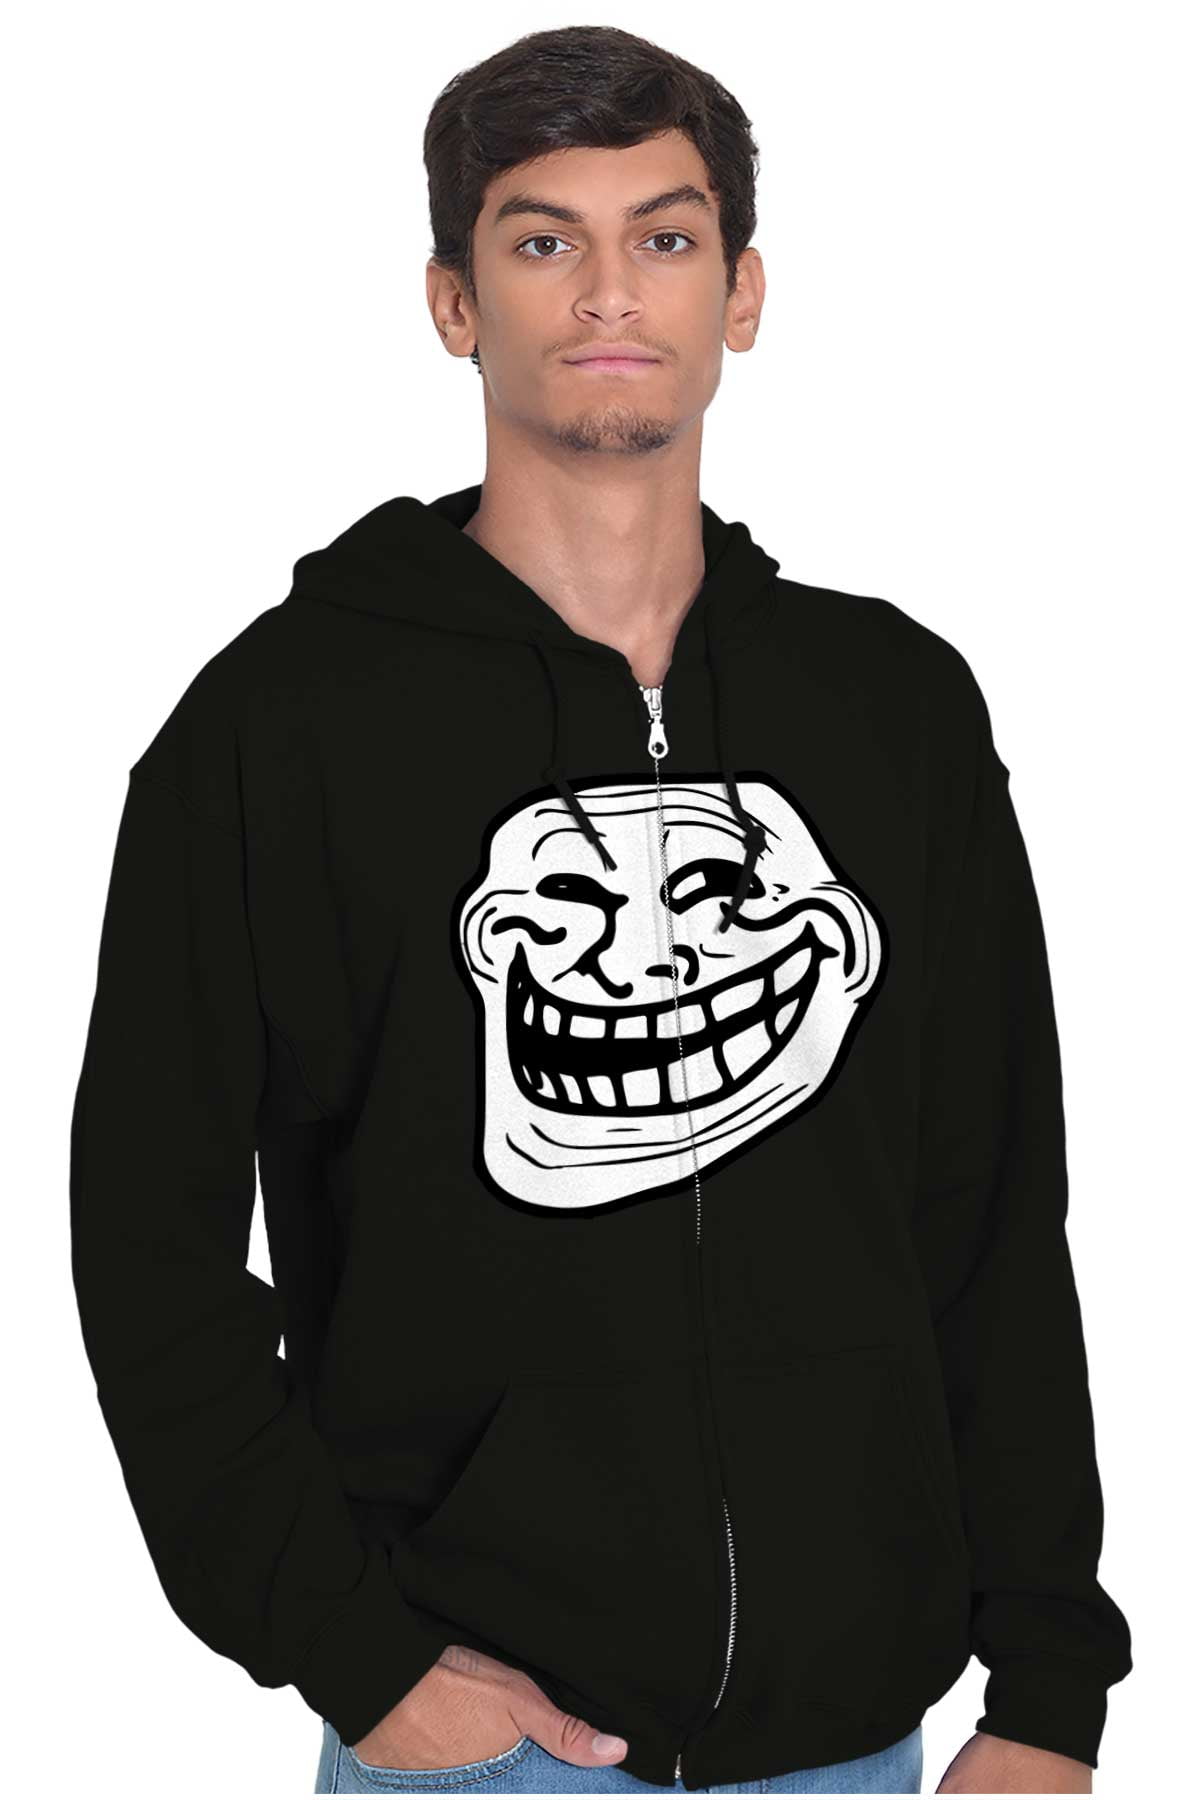 Troll Face Original Meme Smile Mad Zip Up Hoodie Men's Women's Brisco ...